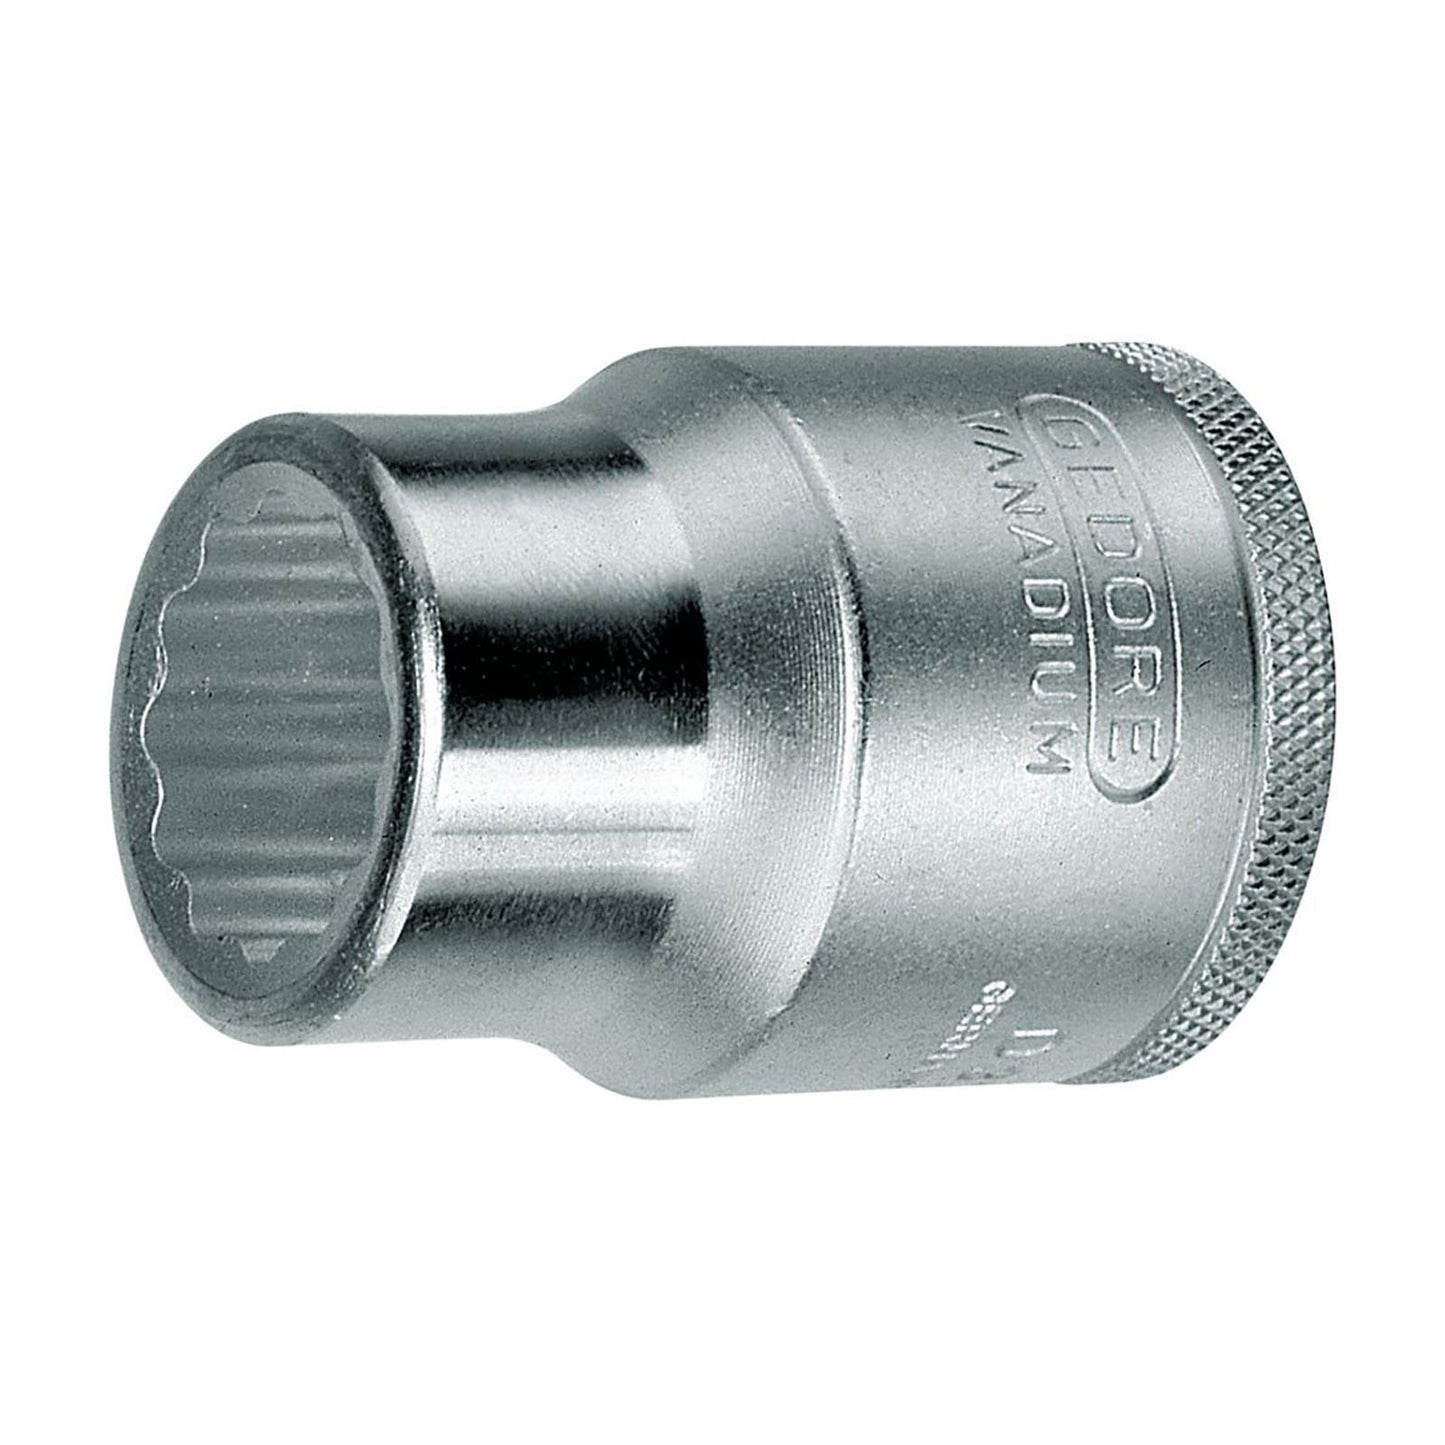 GEDORE D 32 38 - Vaso Unit Drive 3/4", 38 mm (6272910)